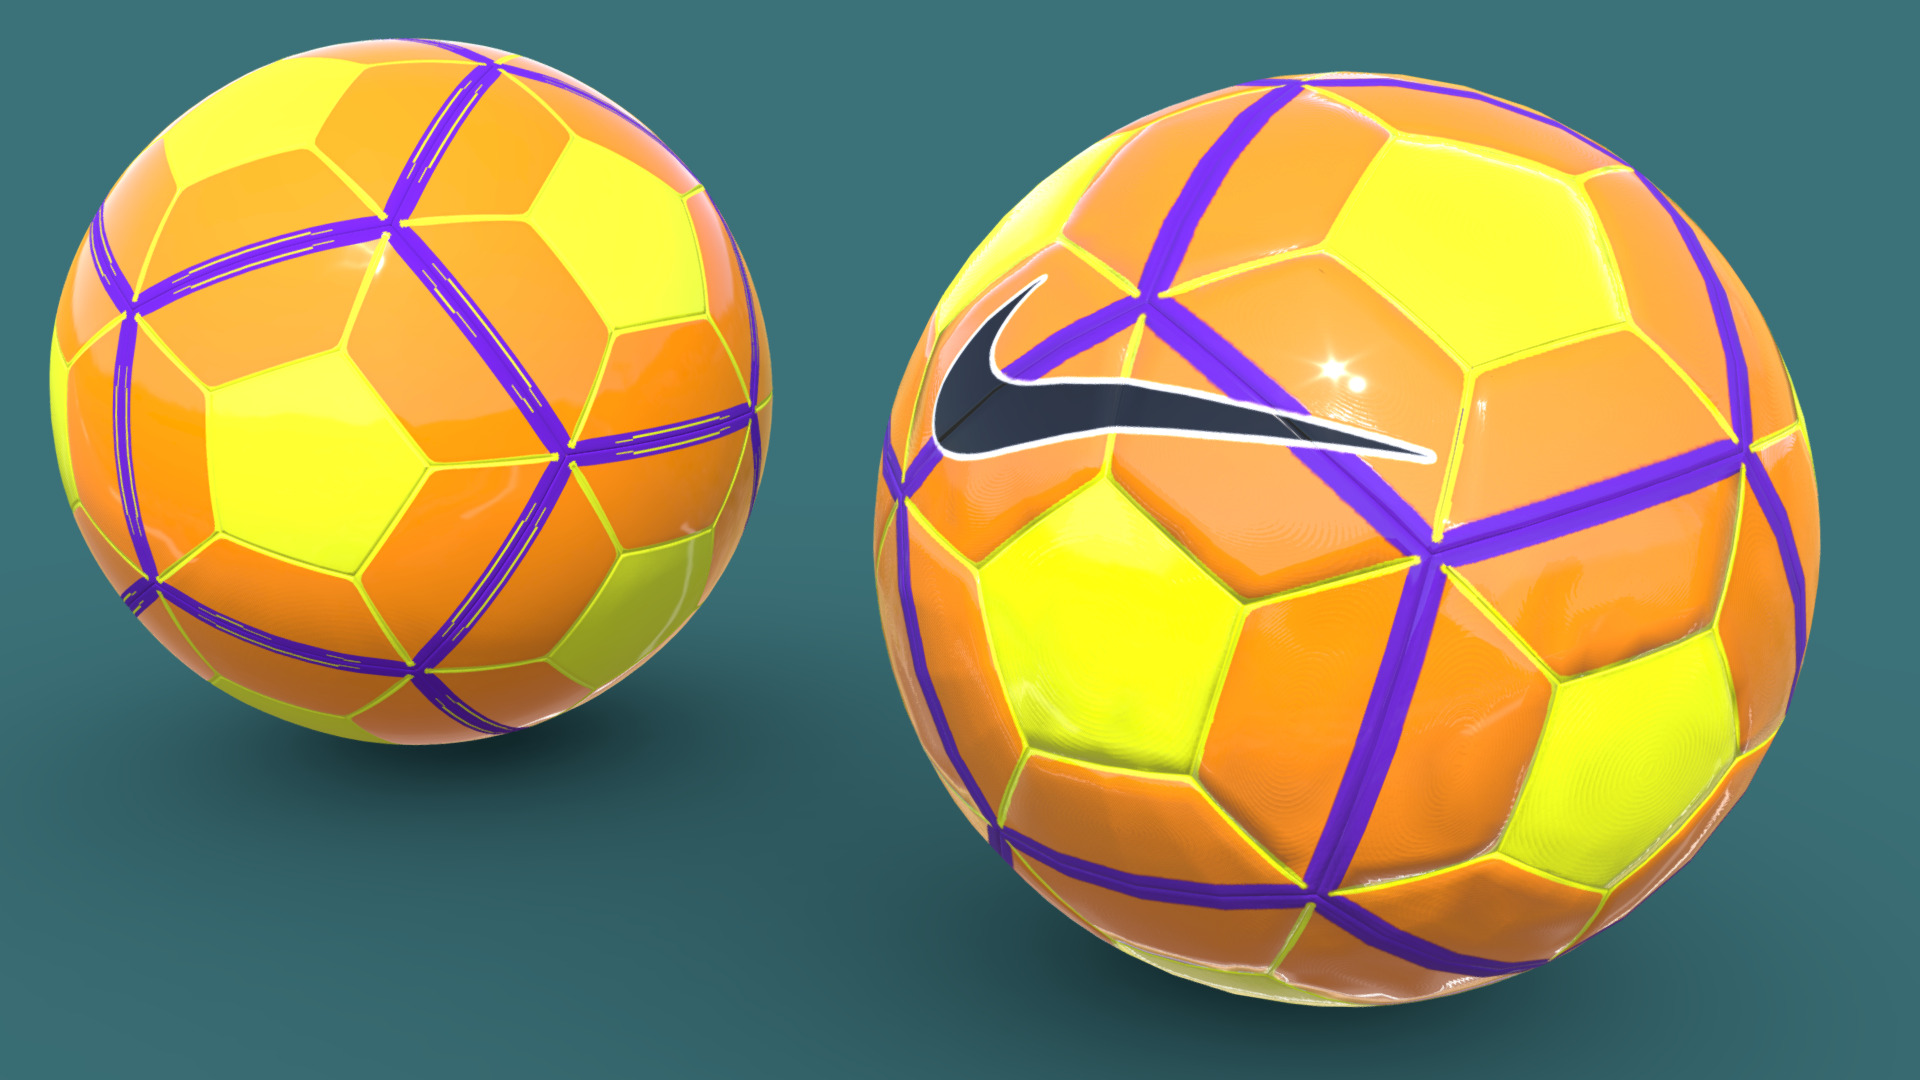 3D model 2015 Premier League Ordem Ball - This is a 3D model of the 2015 Premier League Ordem Ball. The 3D model is about a few colorful balls.